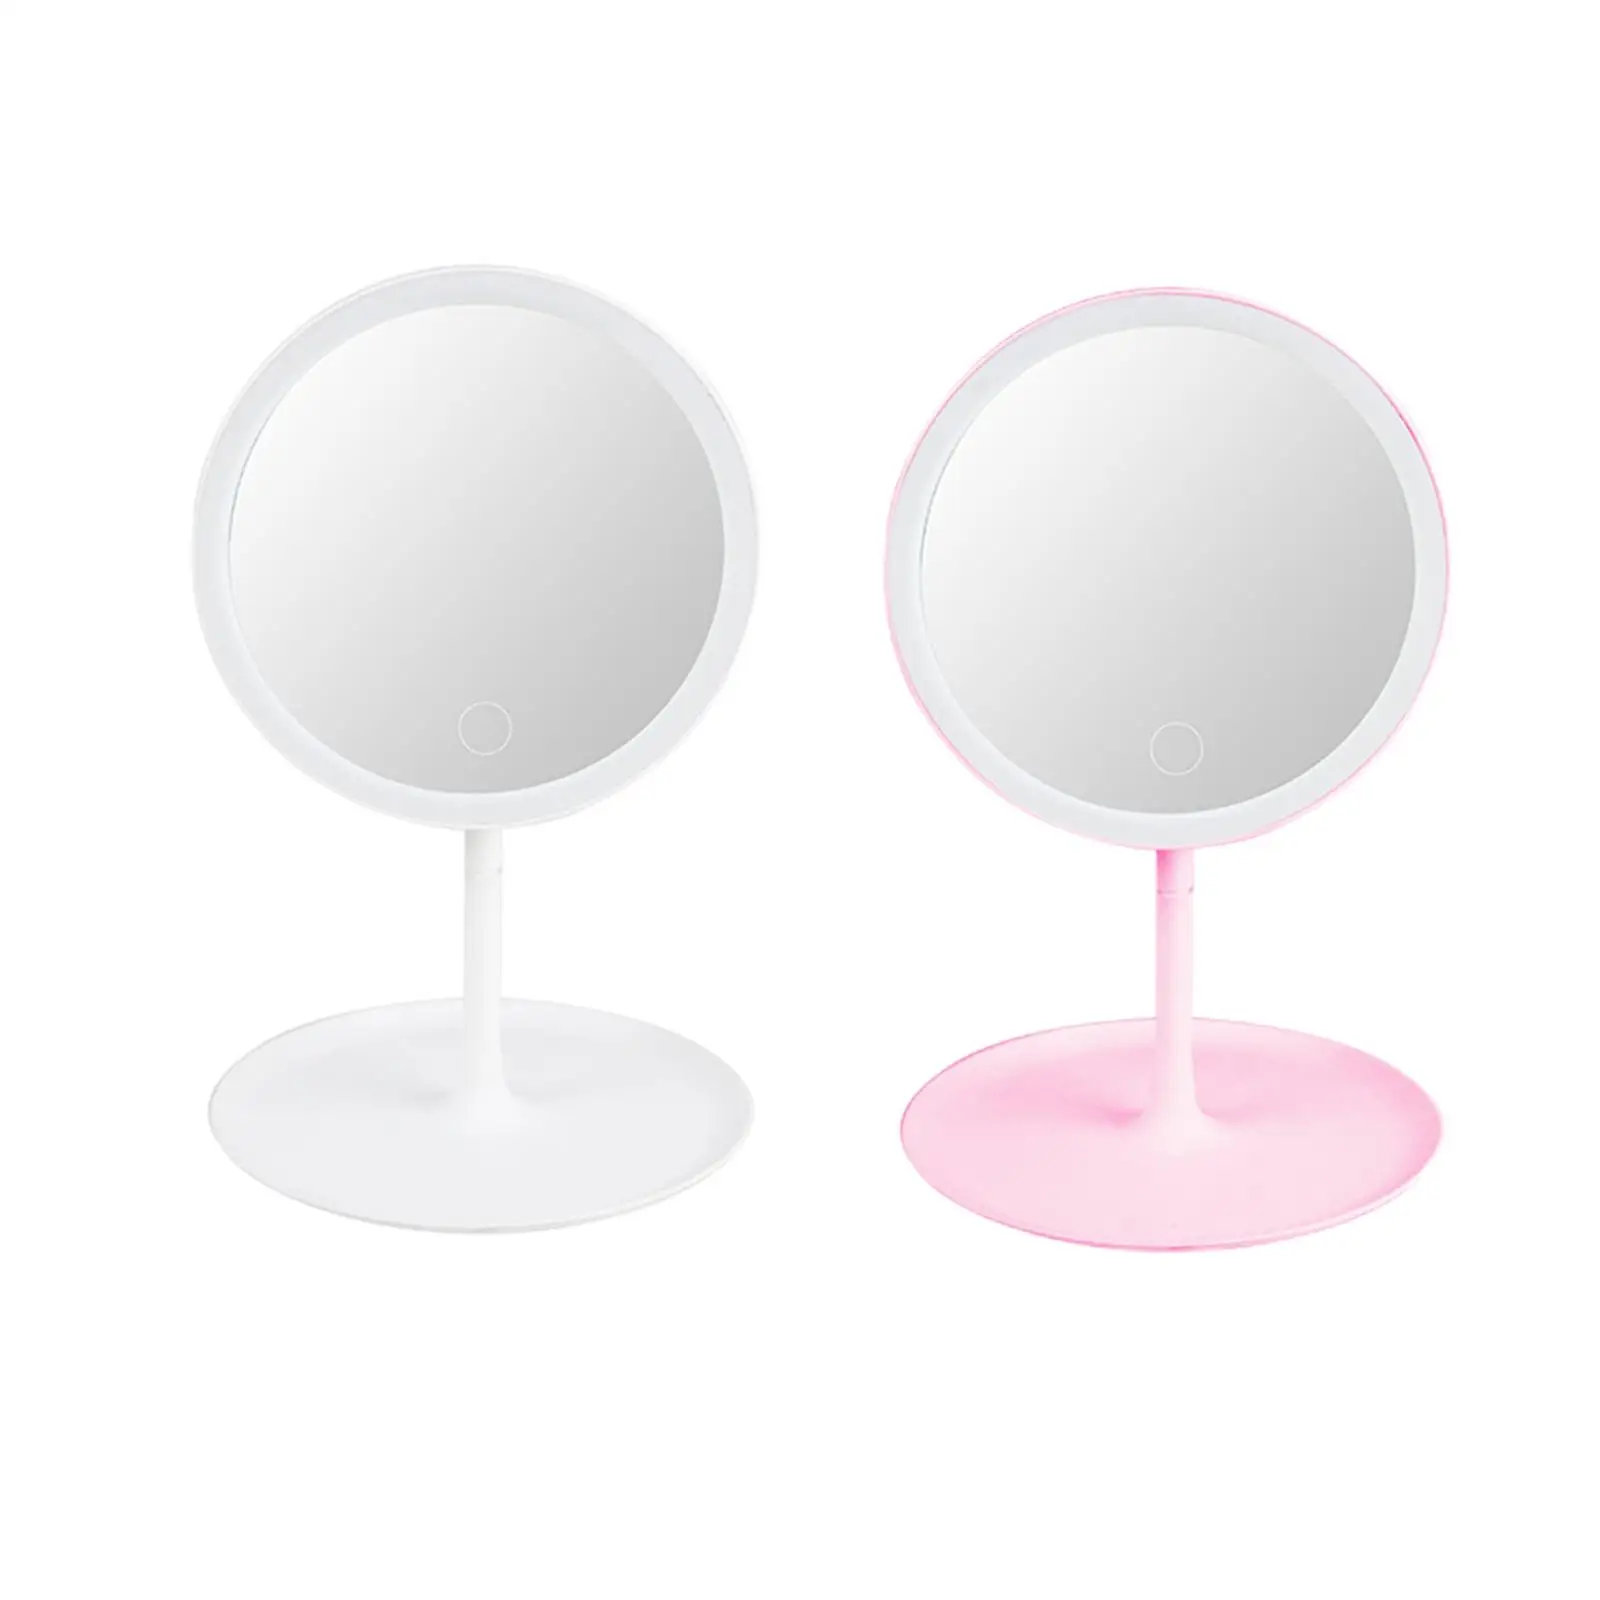 LED Makeup Mirror Illuminated Mirror Desk Vanity Mirror USB for Vanity Desk